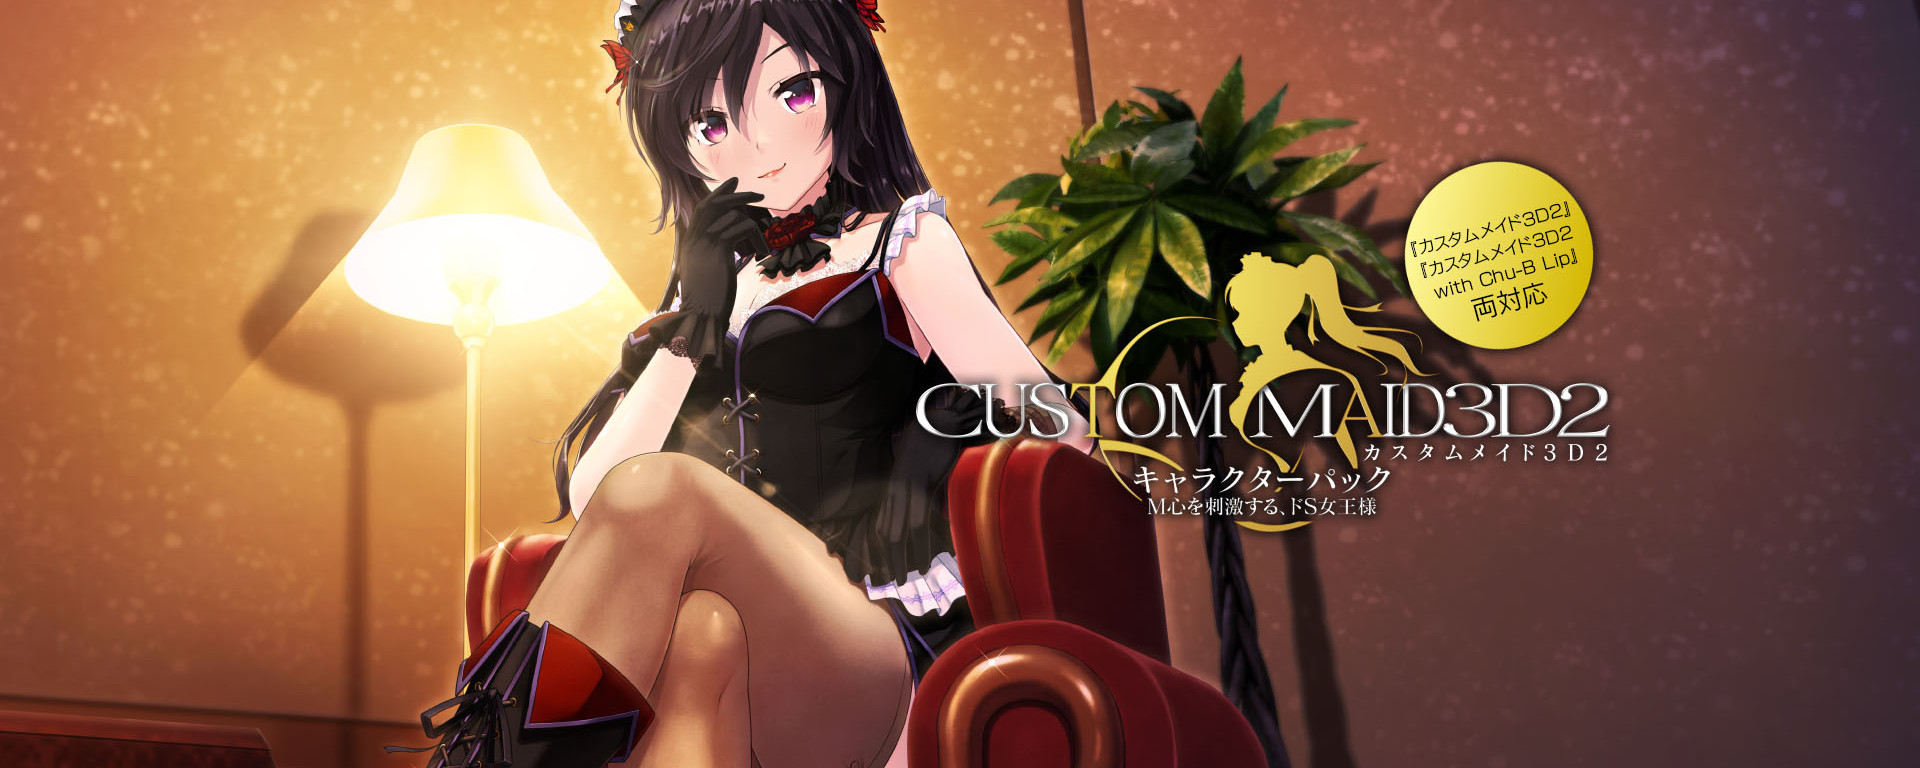 custom maid 3d 2 save game